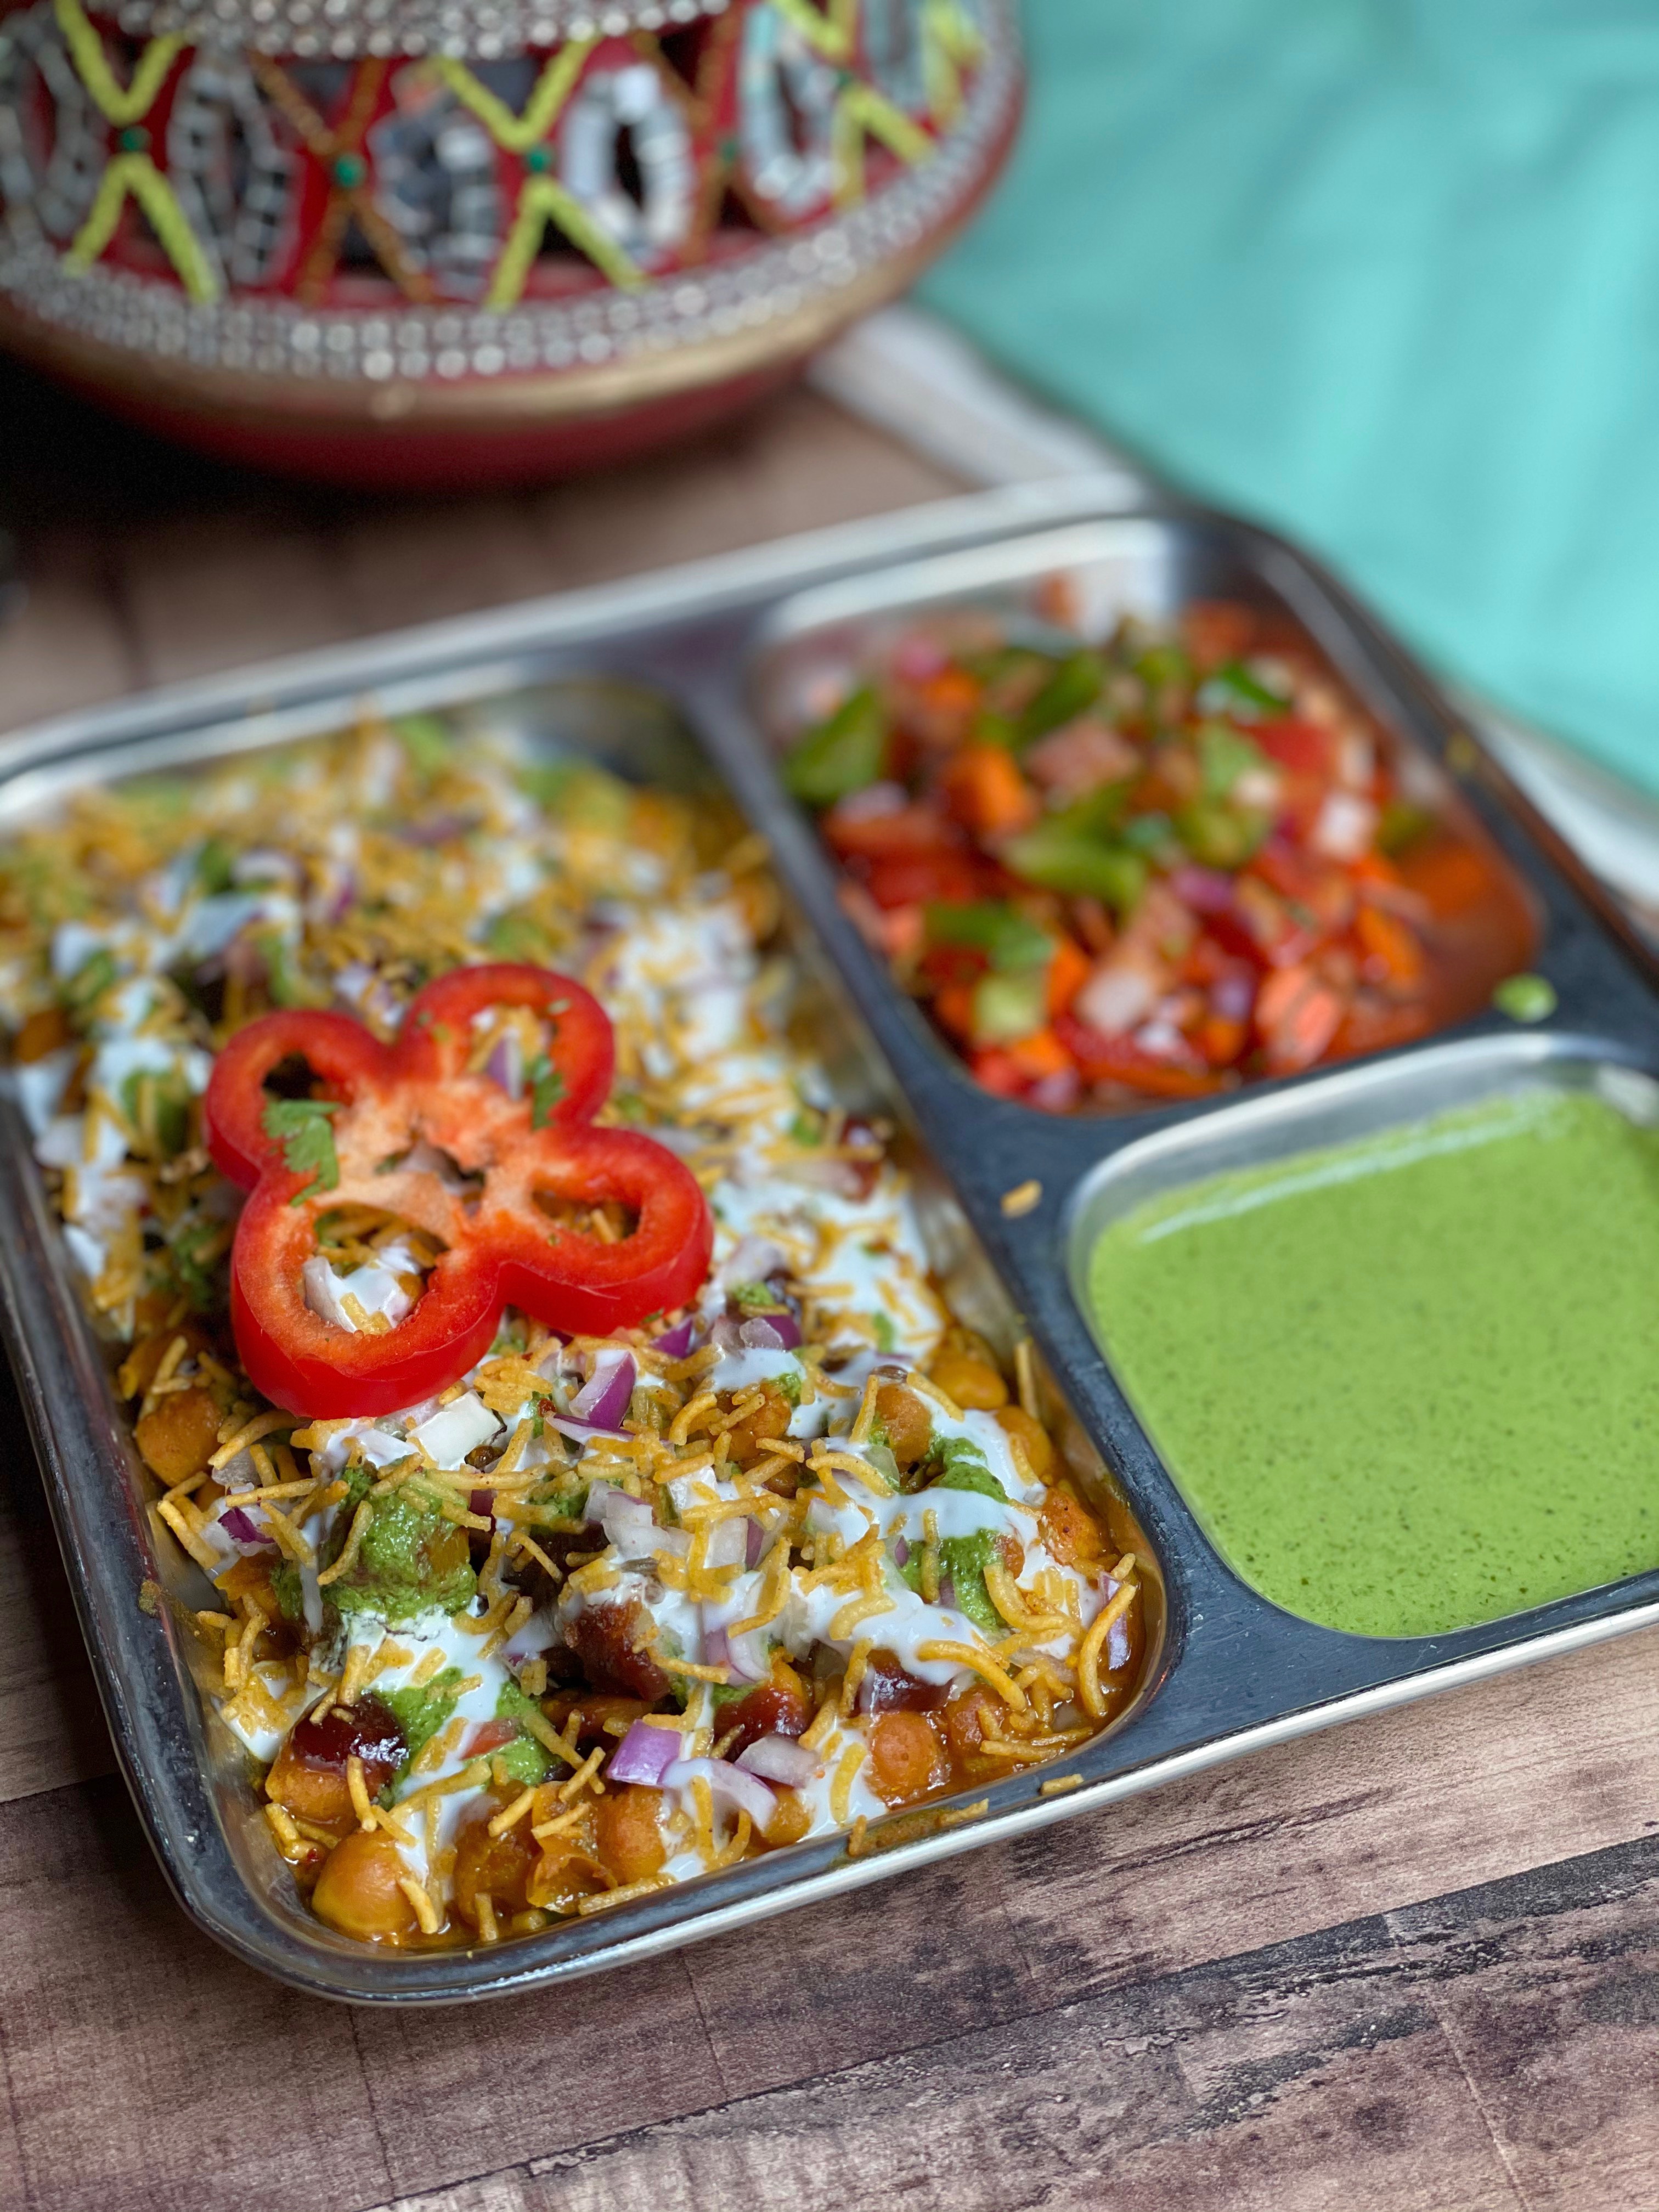 Adams Morgan’s Bombay Street Food 3 debuts new dishes like aloo tiki&nbsp;(potato, chickpeas, and chutney).